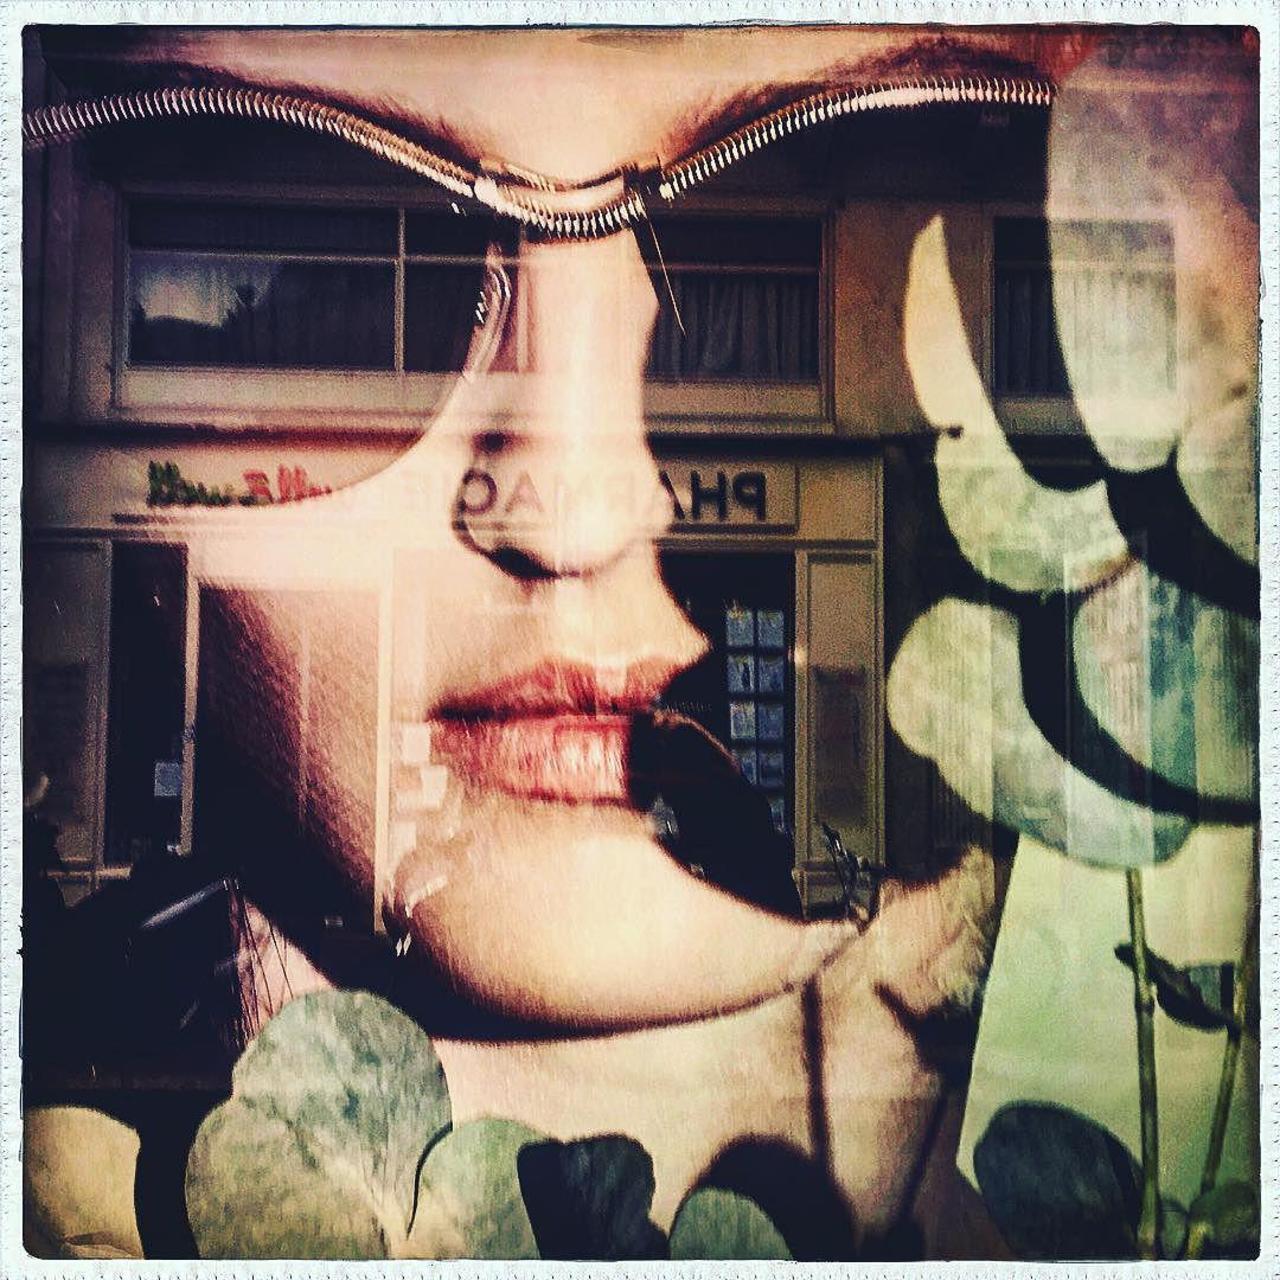 circumjacent_fr: #Paris #graffiti photo by laurent__payet http://ift.tt/1XcPnq4 #StreetArt http://t.co/Q58MIy7QtQ